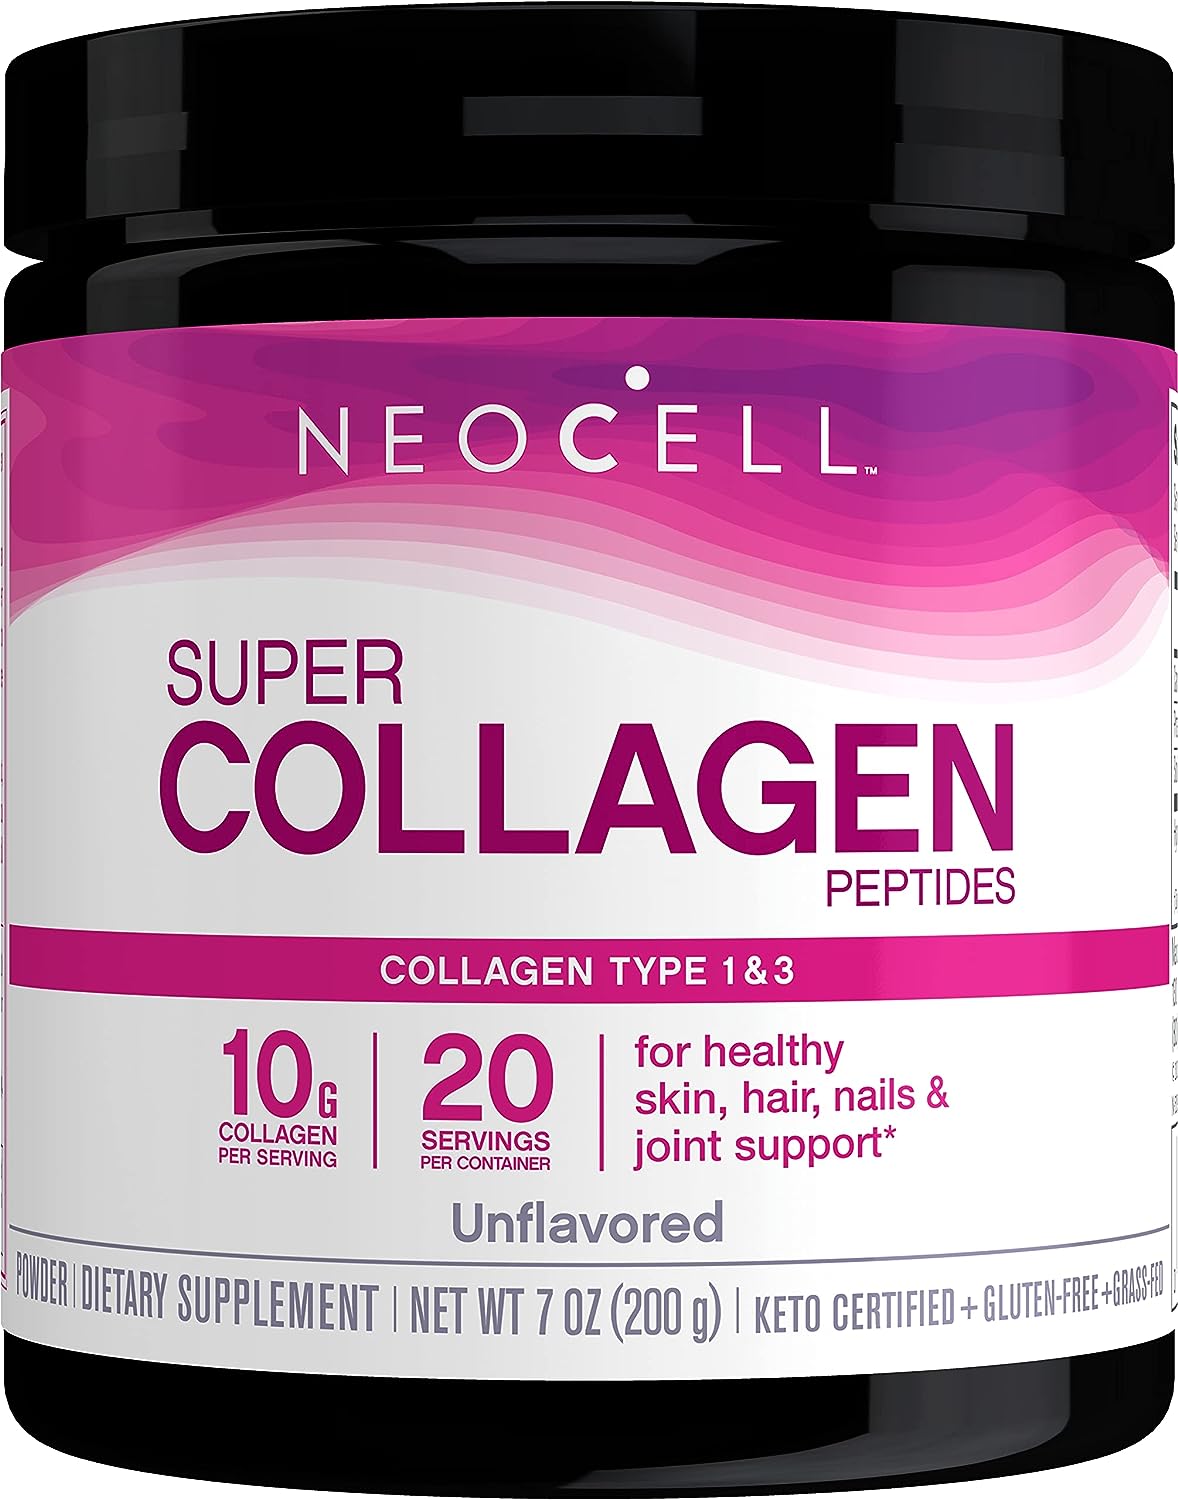 NeoCell Super Collagen Powder, 10g Collagen Peptides pe